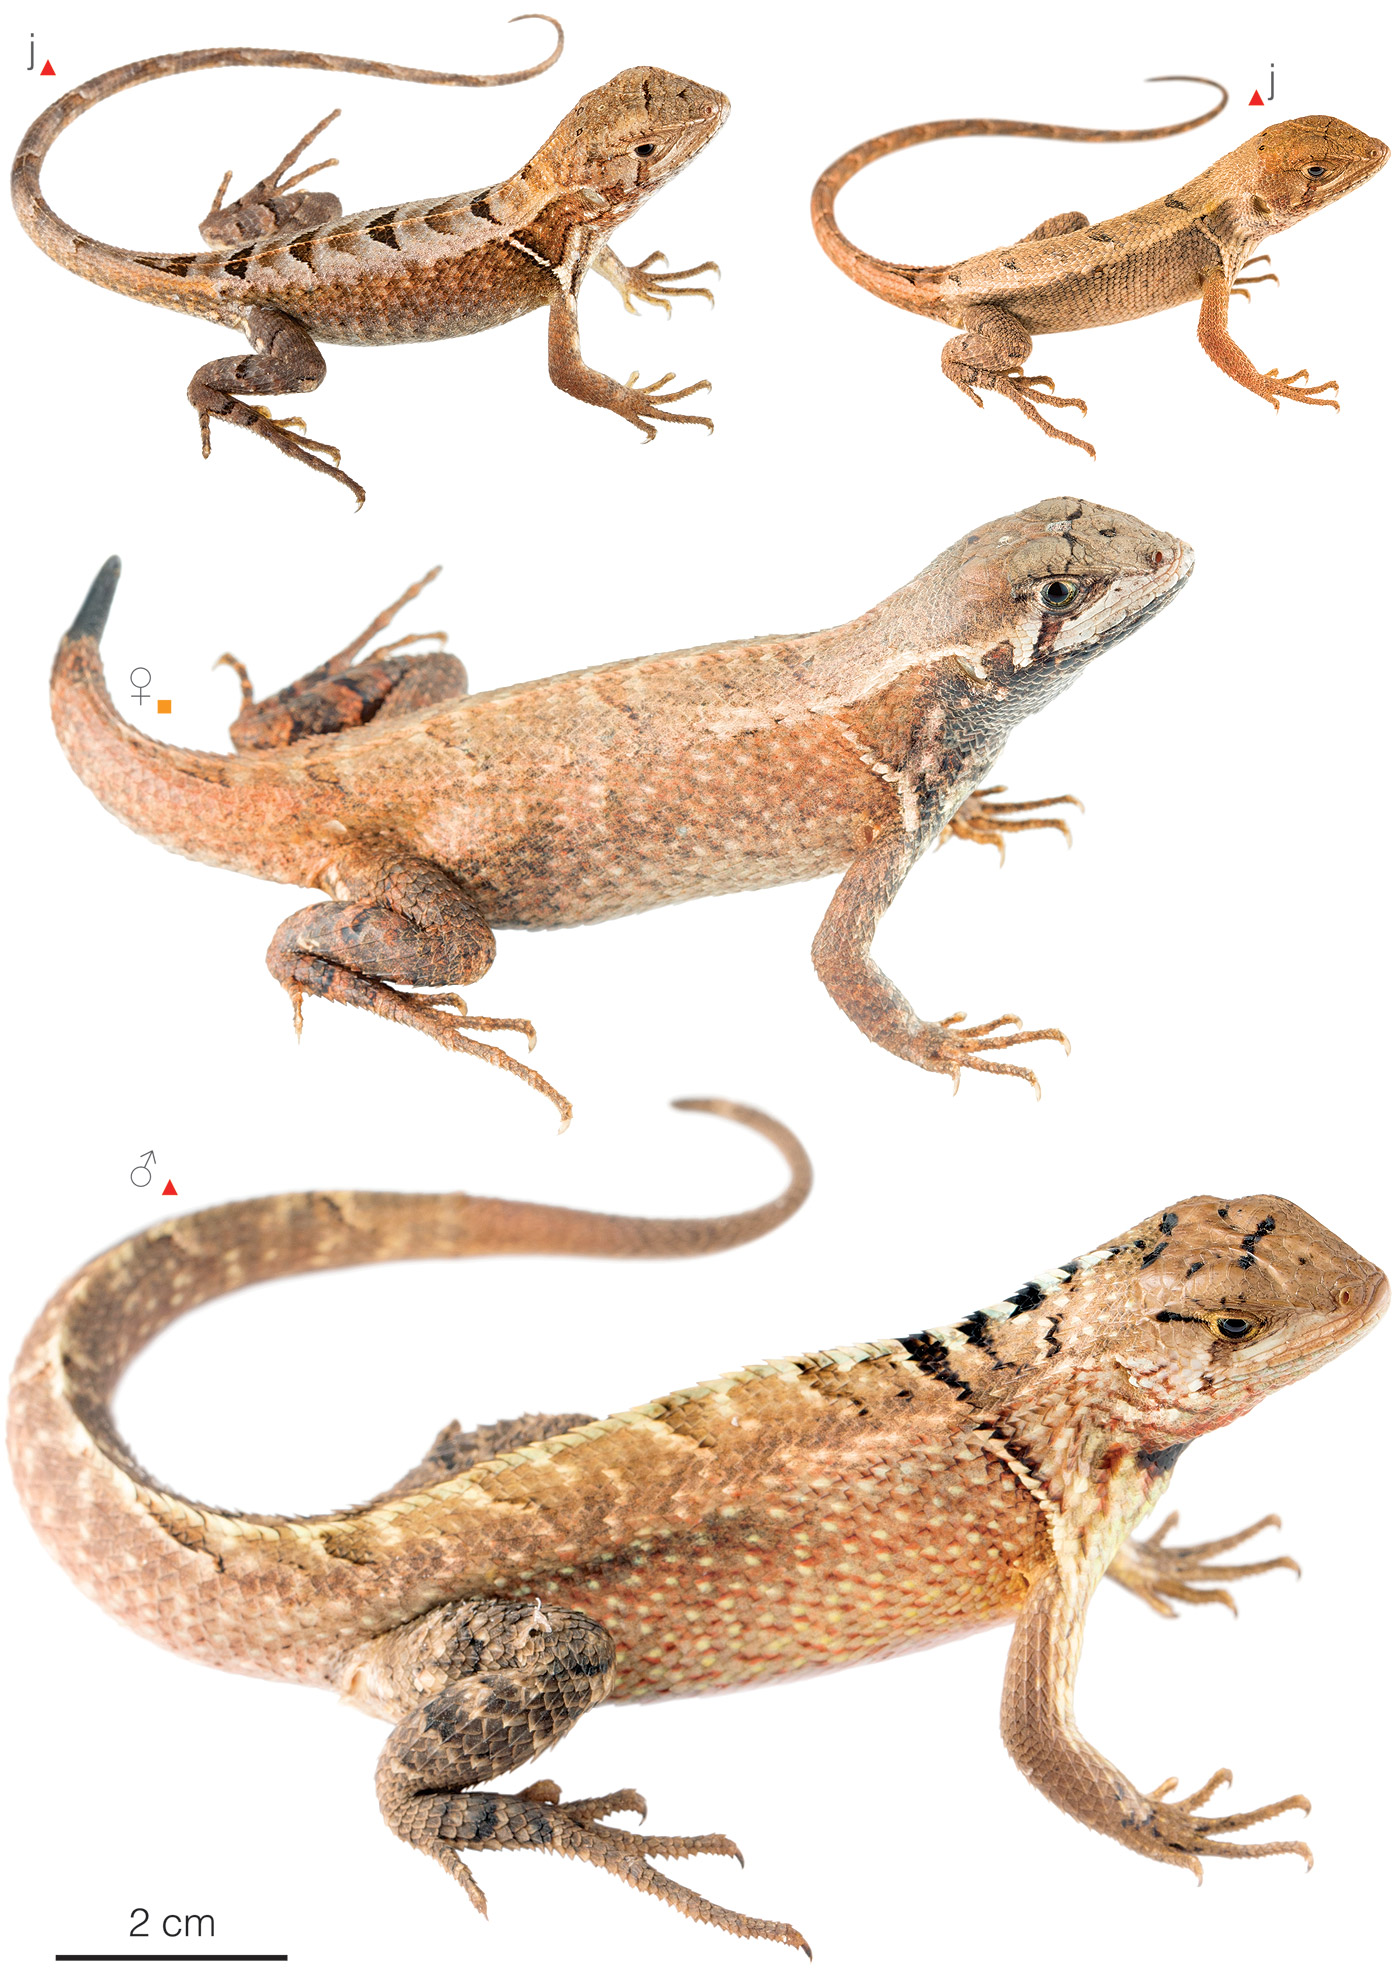 Figure showing variation among individuals of Stenocercus puyango